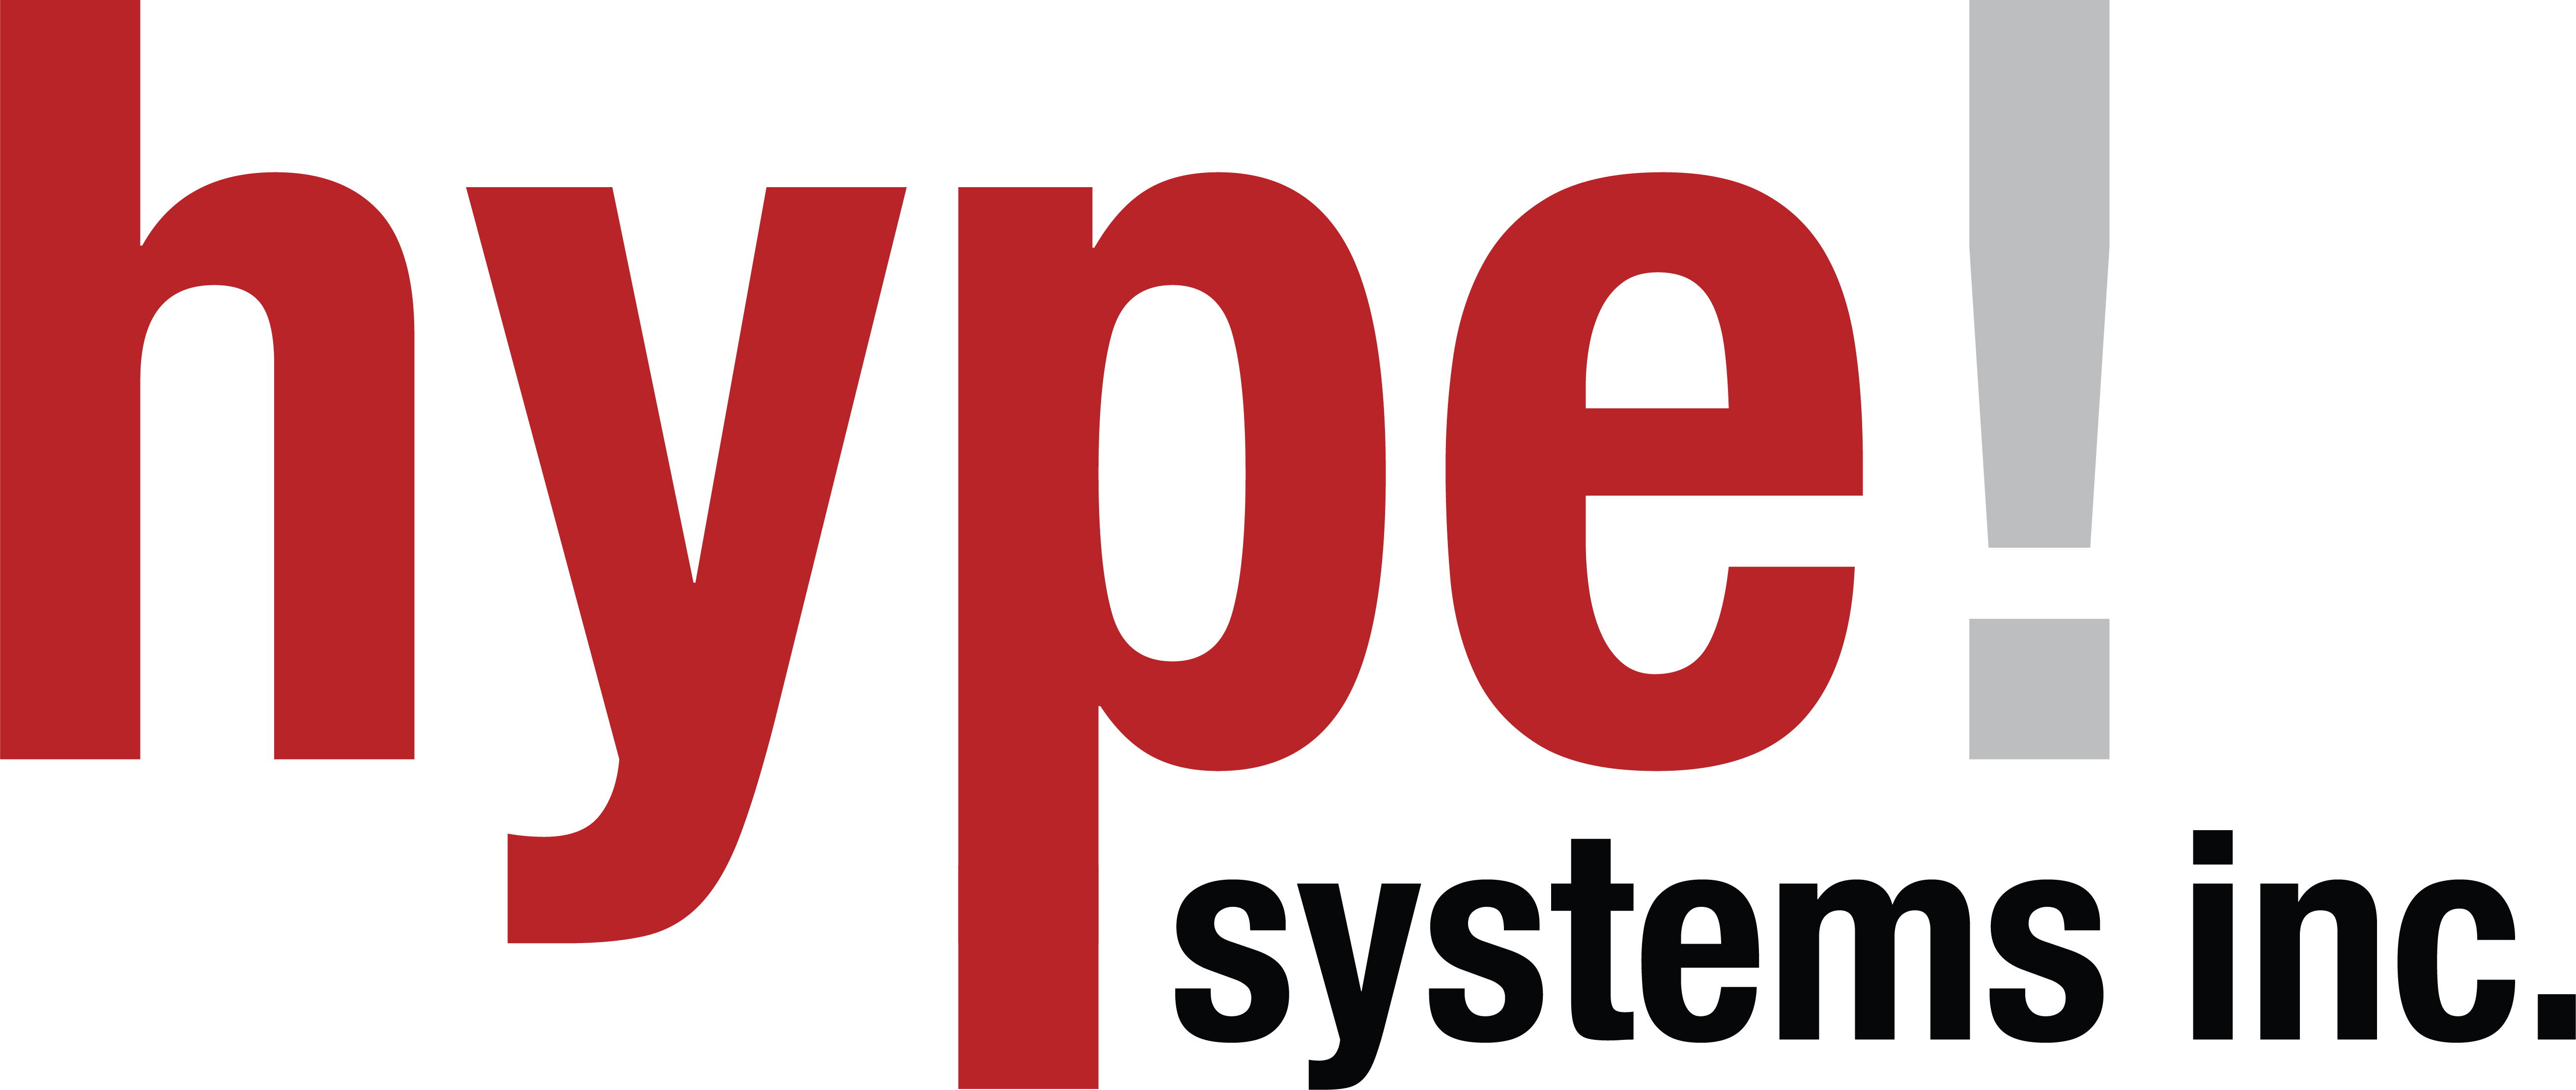 HYPE Systems Inc.